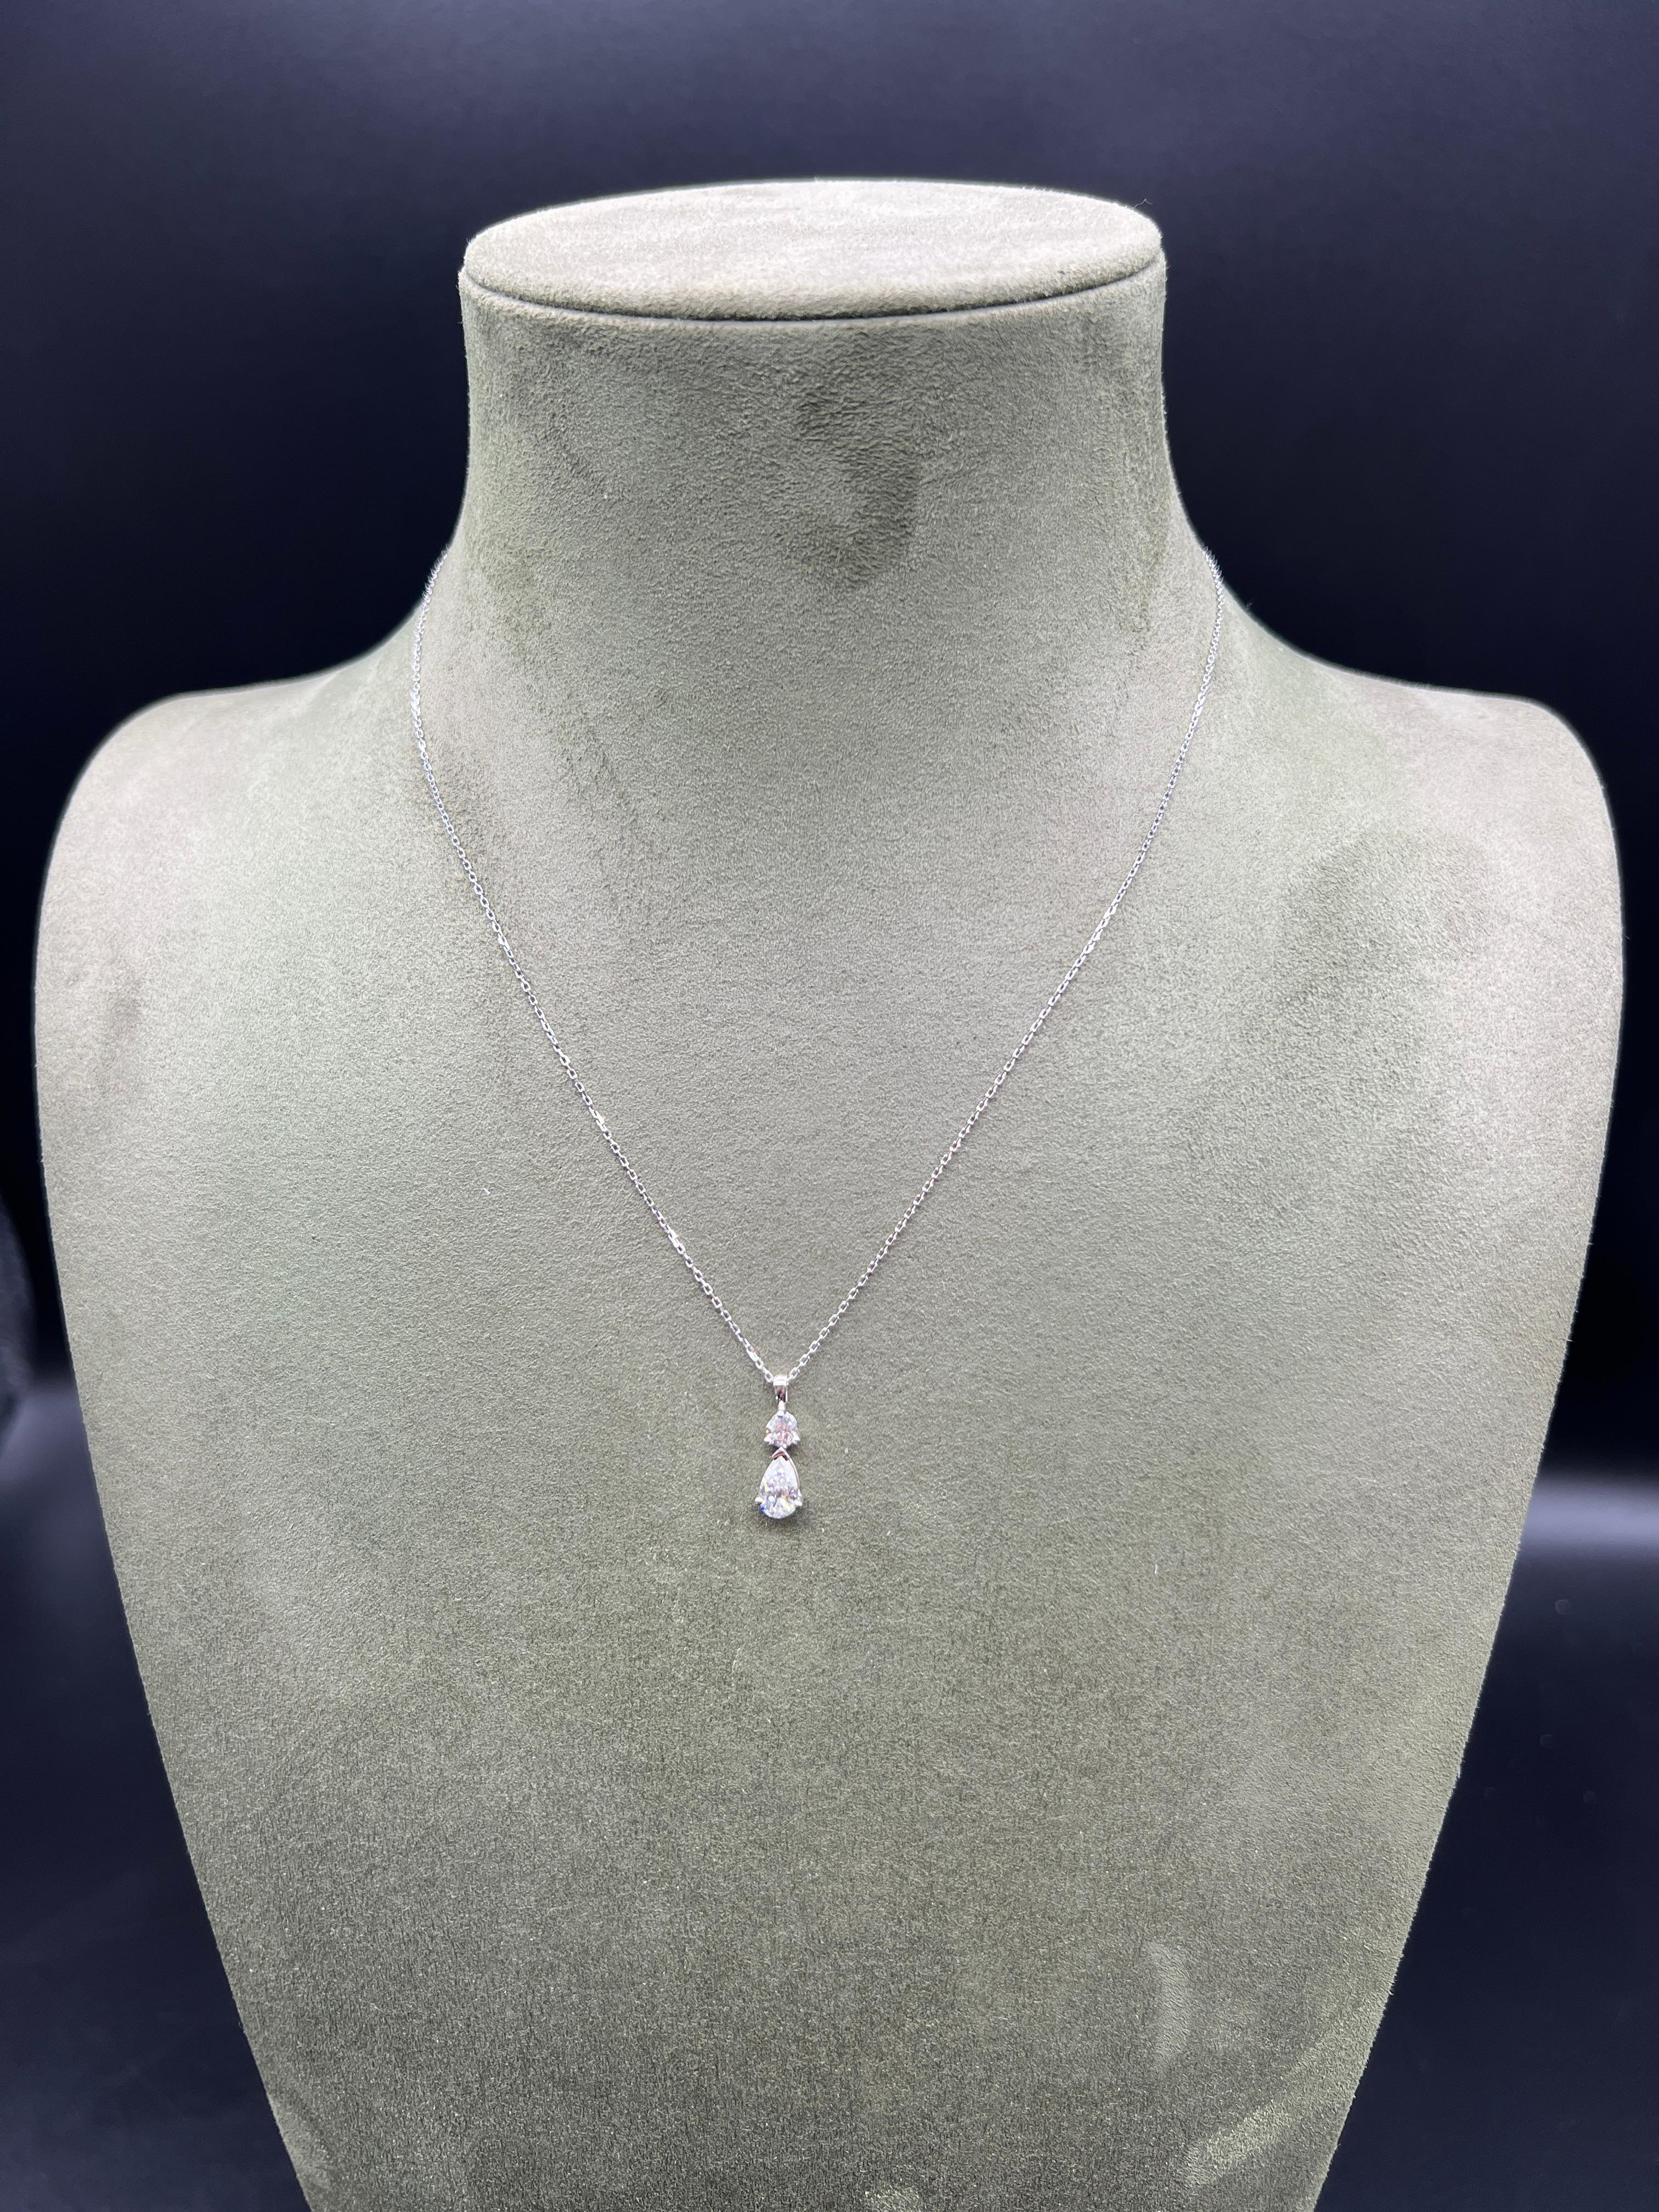 Women's or Men's Pendant Necklace White Gold Diamond For Sale